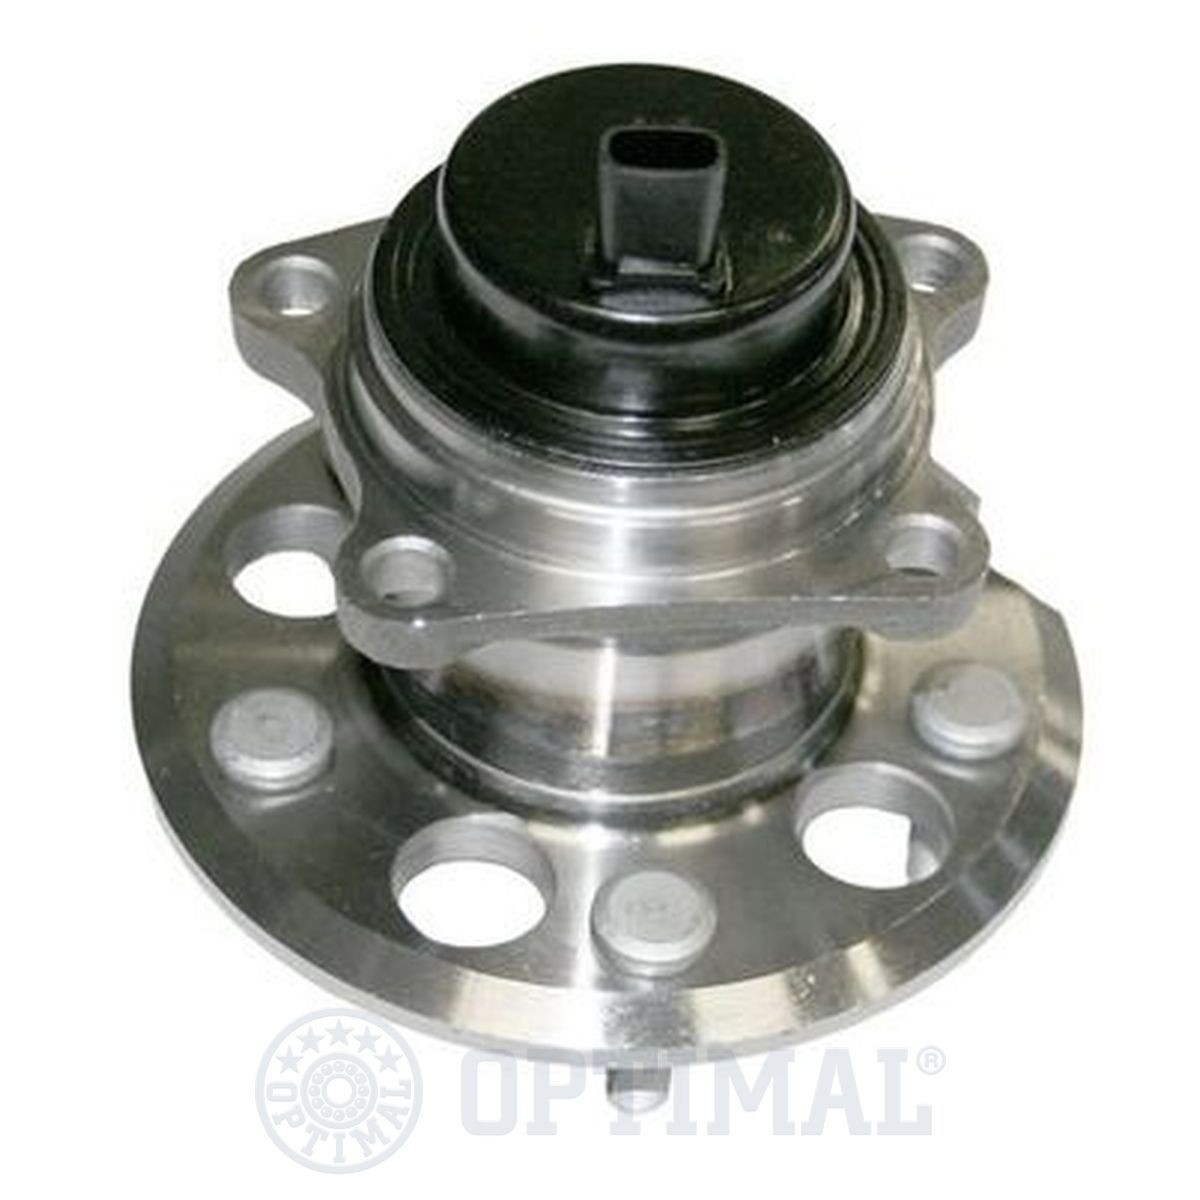 OPTIMAL 982741 Wheel bearing kit with integrated ABS sensor, 152 mm